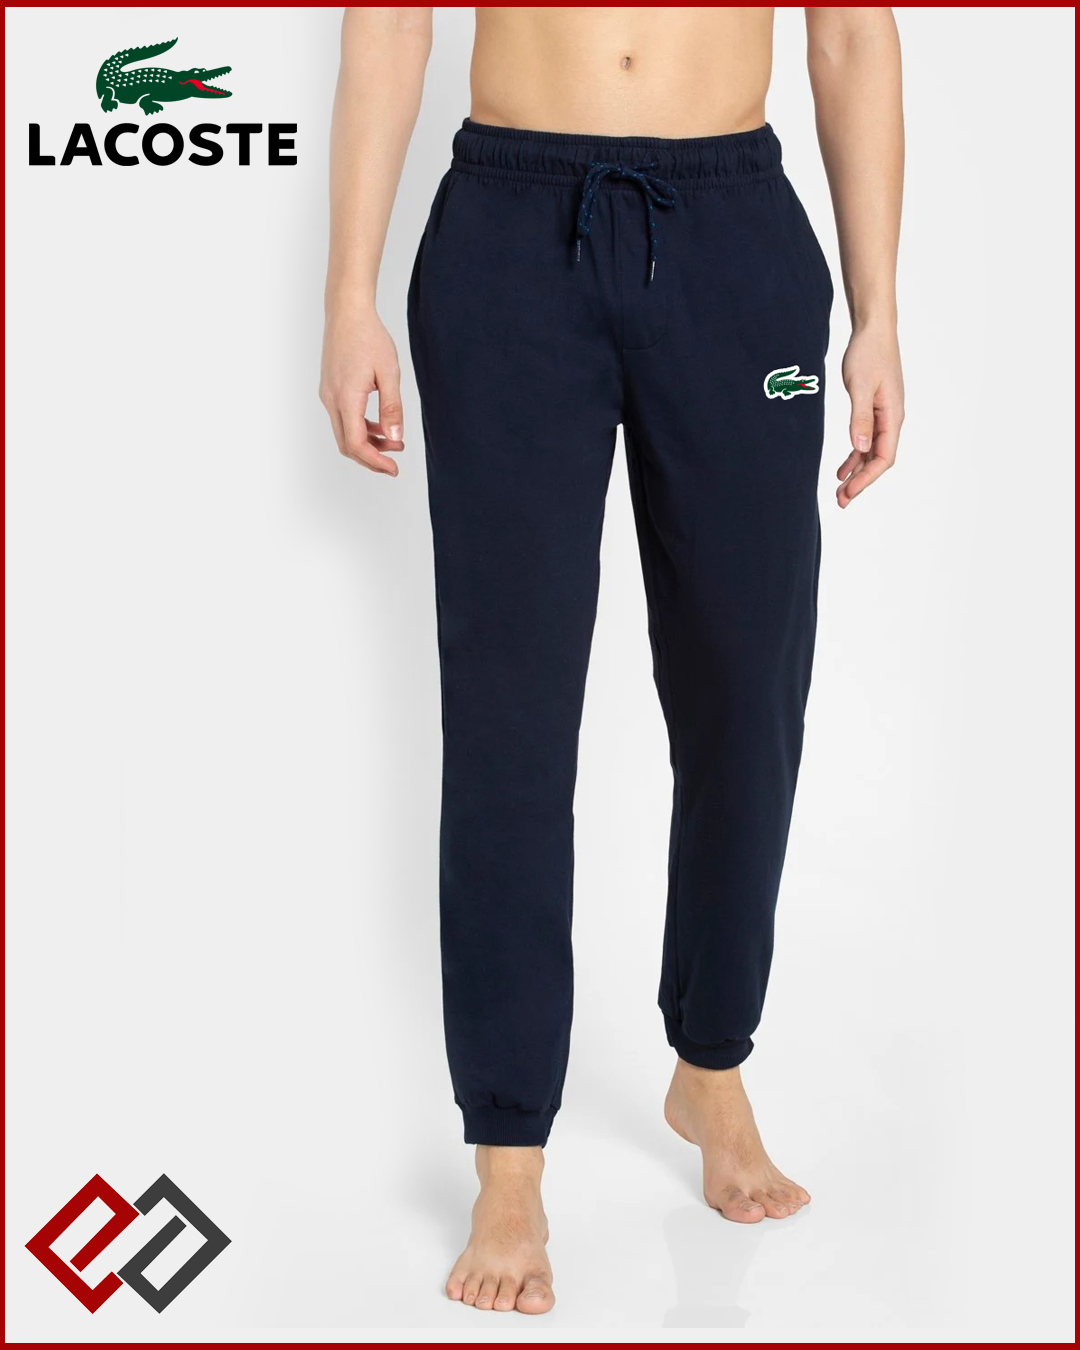 Europa on Twitter: "Lacoste Men's Sweatpants -Cotton Blend -M L XL XXL -Regular Fit For Info: 📱 +91 9840047698 📧 info@leuropa.org #Leuropa #apparels #Joggers #sales #fashion #clothes #wholesale #Retail #menswear #